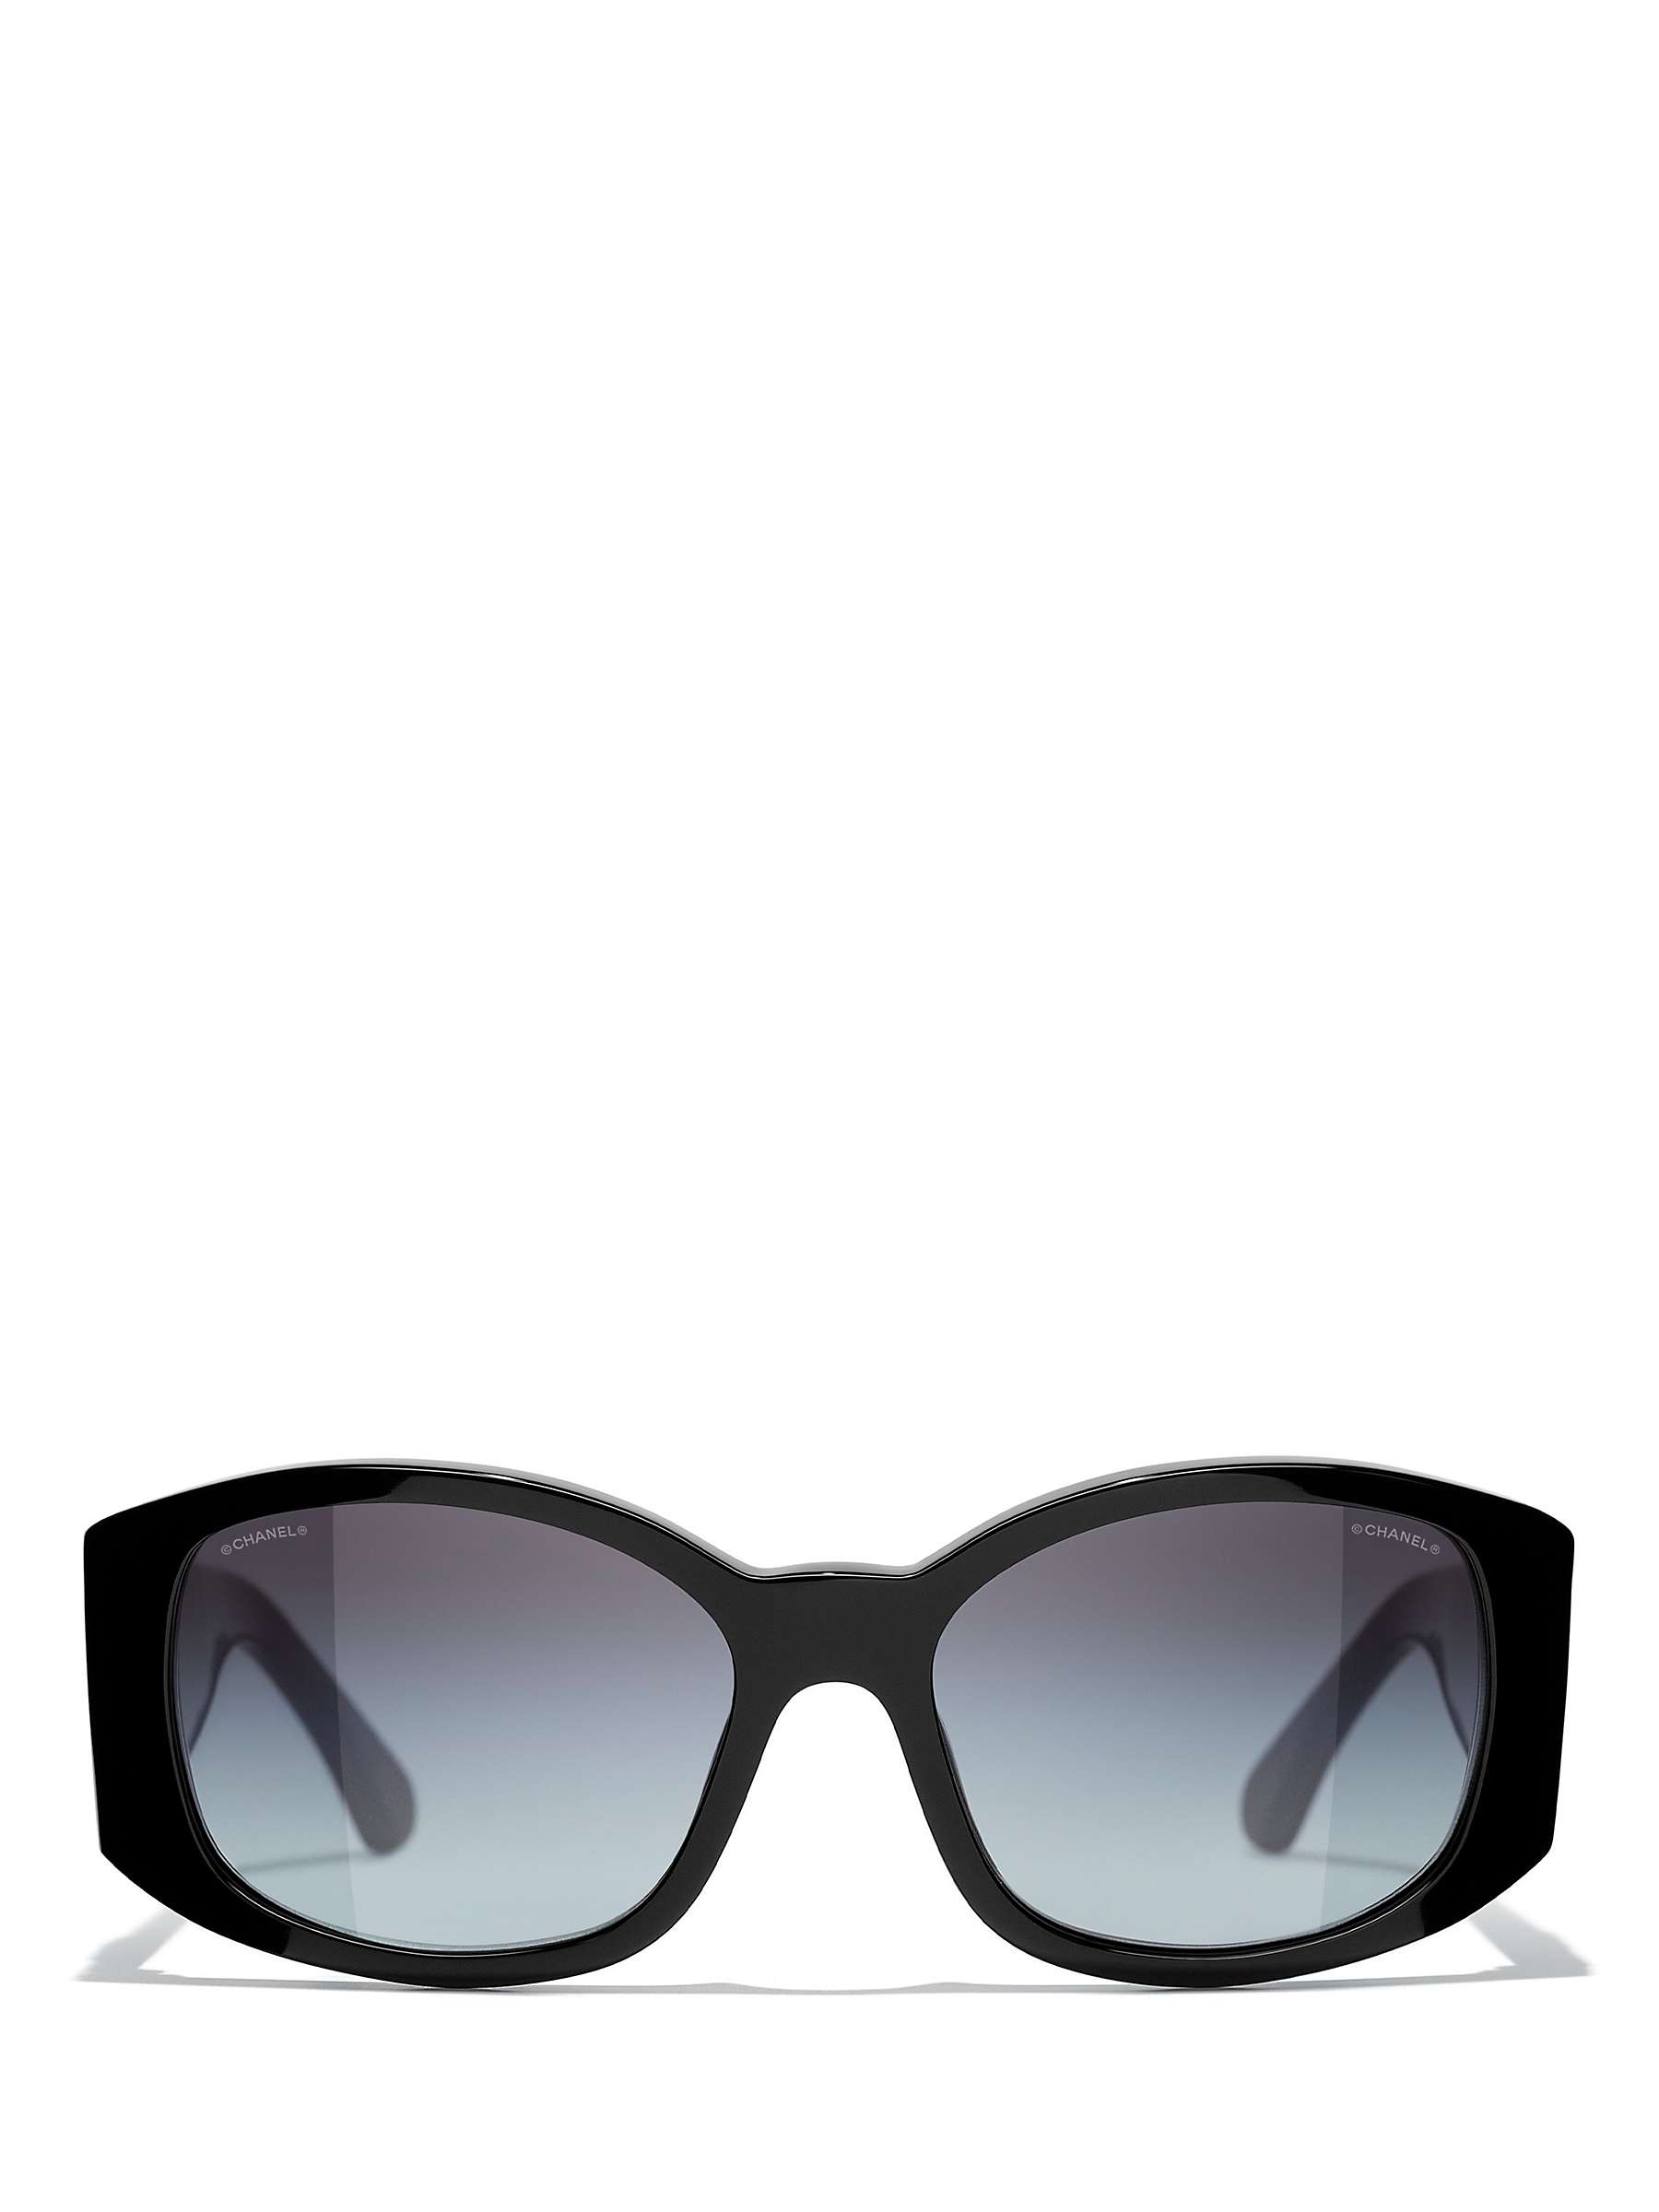 chanel 5144 sunglasses